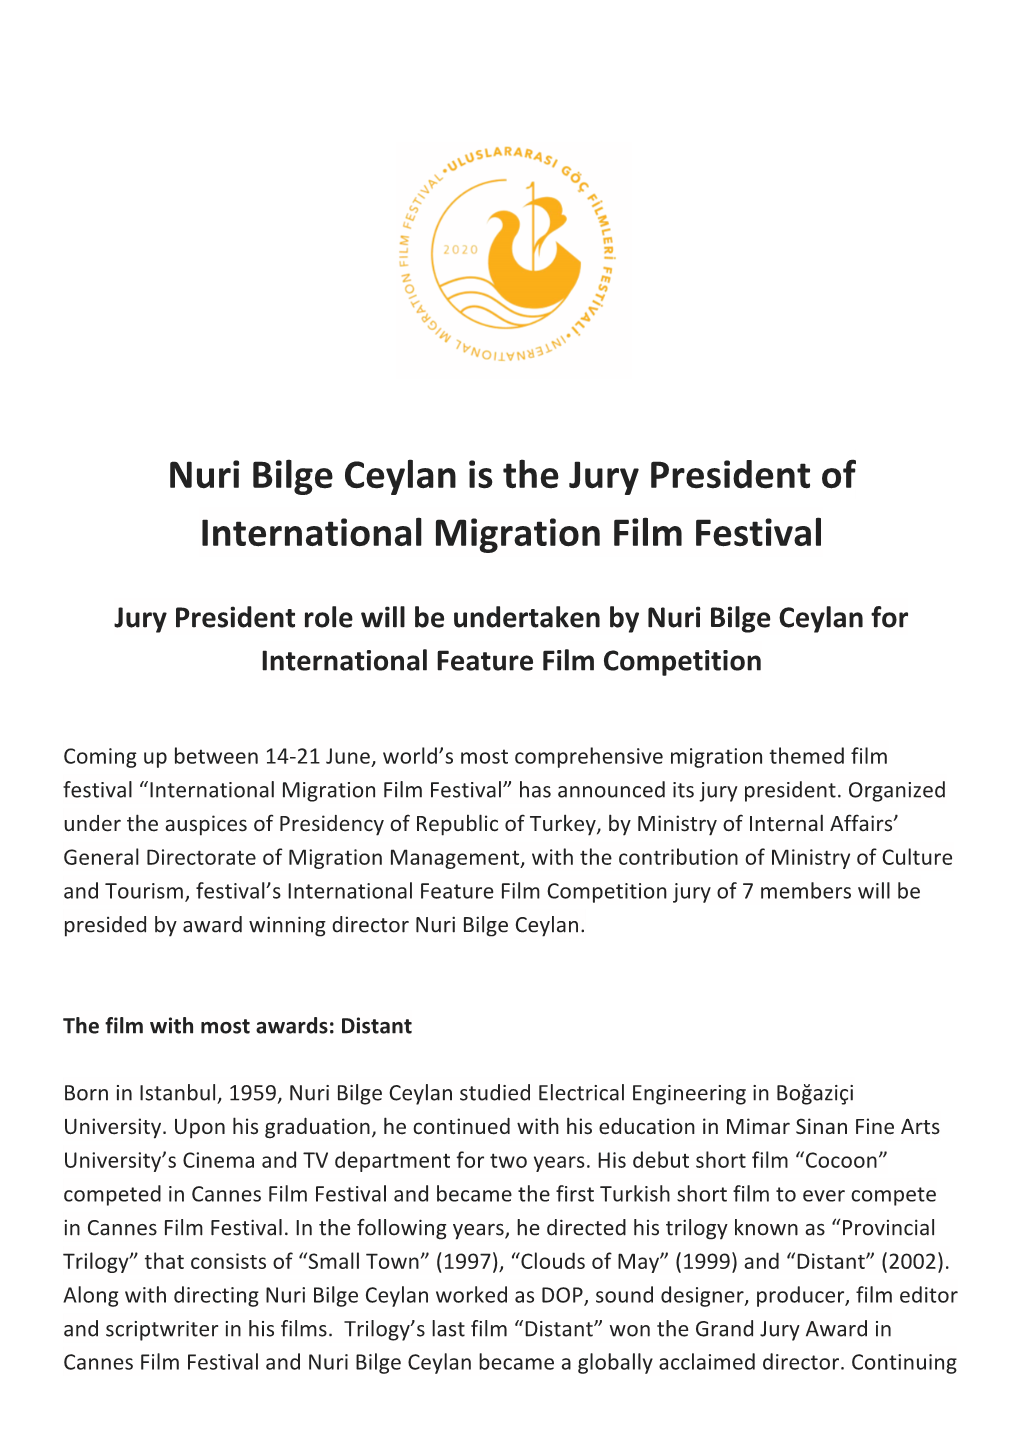 Nuri Bilge Ceylan Is the Jury President of International Migration Film Festival